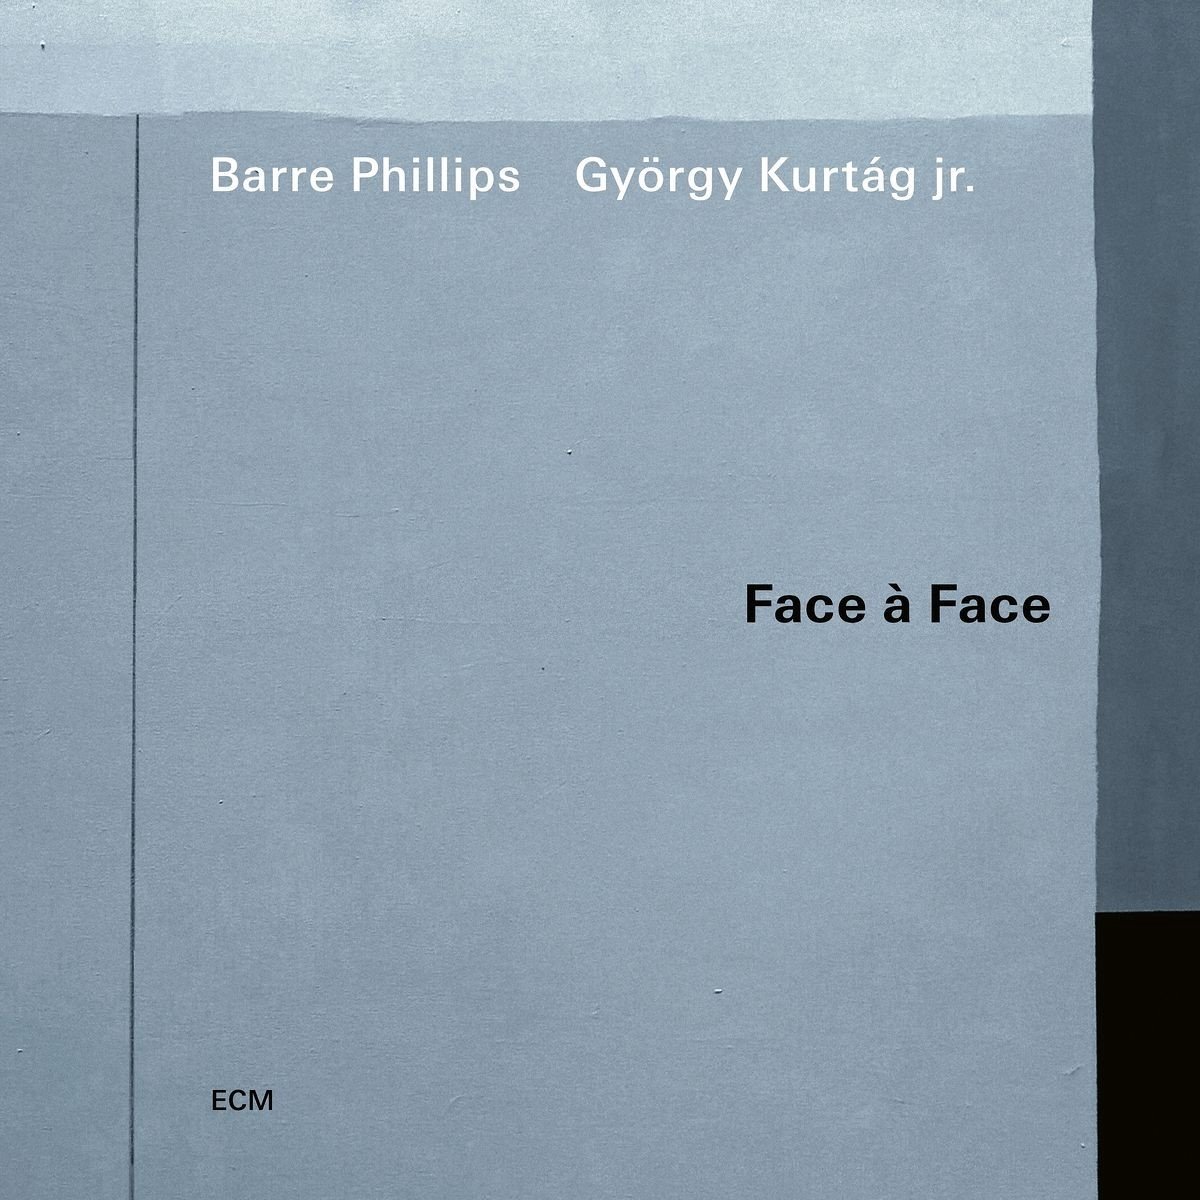 Face a Face | Barre Phillips, Gyorgy Kurtag Jr.